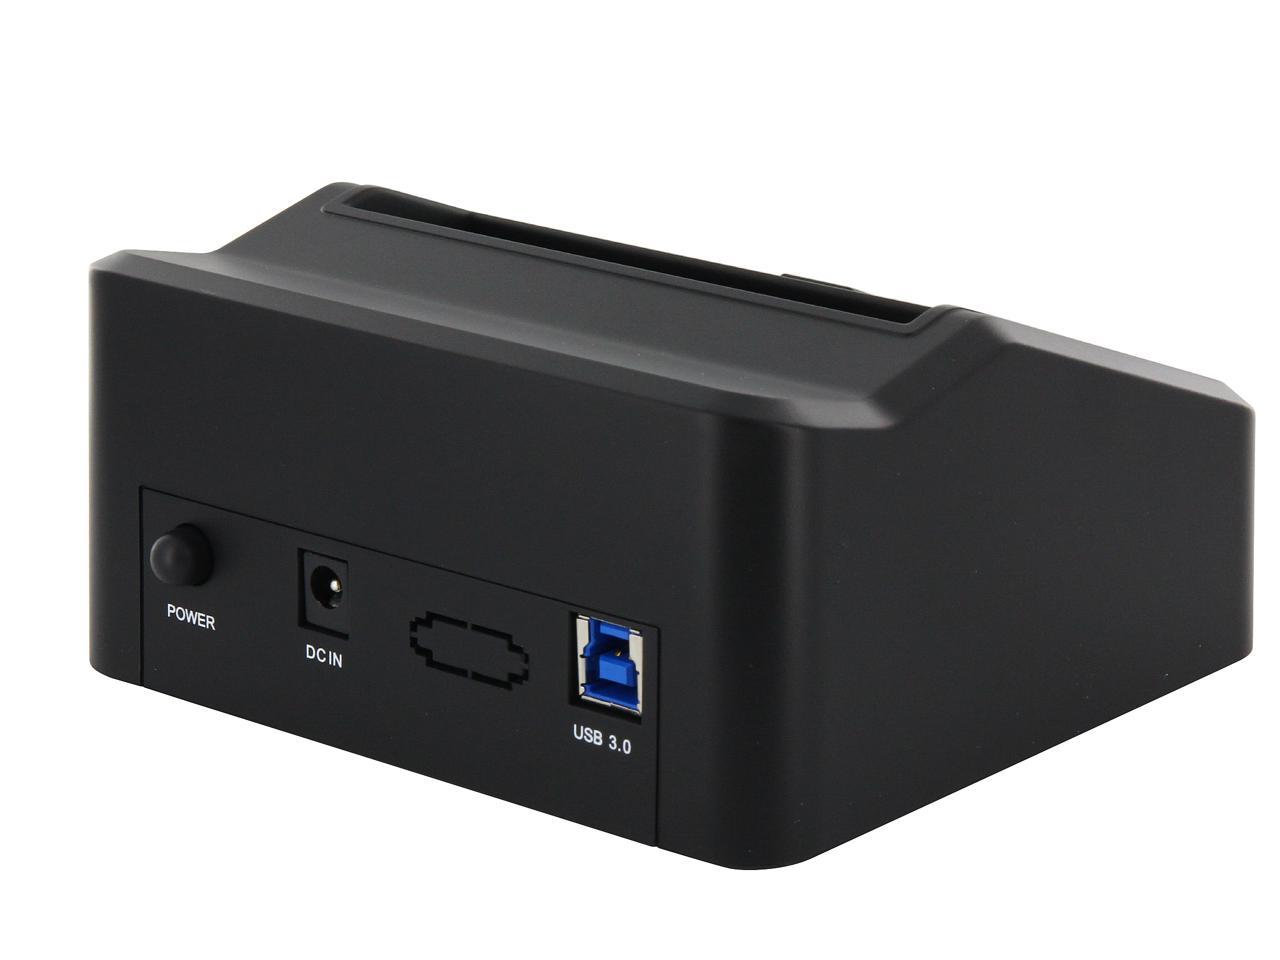 KINGWIN EZD-2535U3 SuperSpeed USB 3.0 to SATA Drive Docking Station